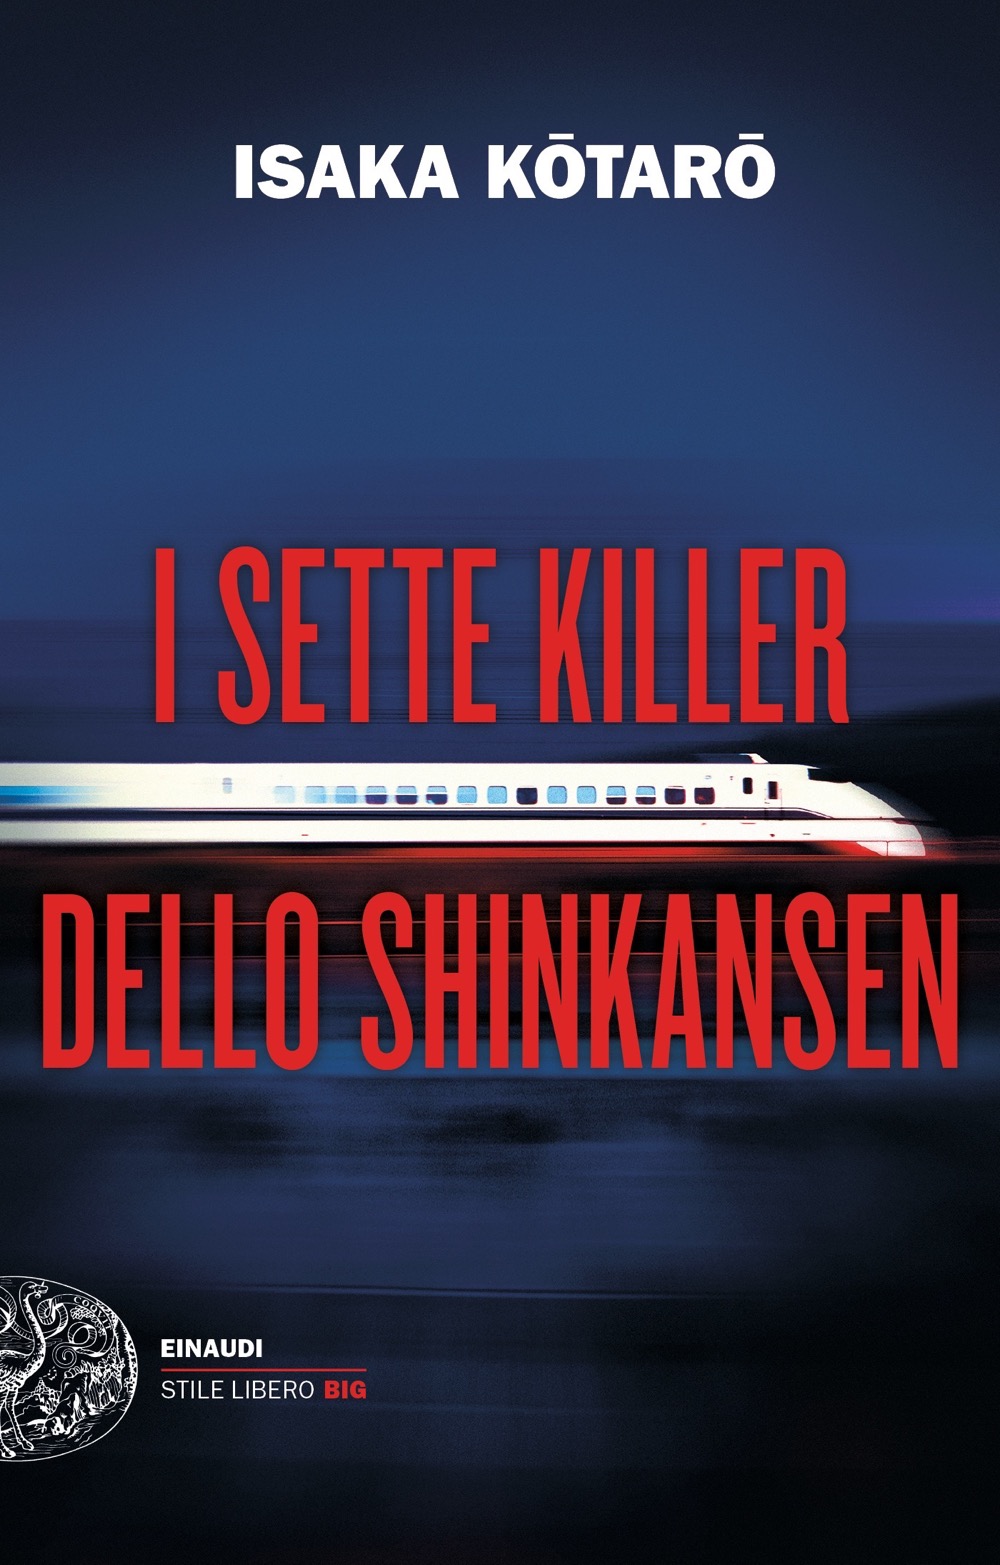 Kōtarō Isaka: I sette killer dello Shinkansen (italiano language, Einaudi)